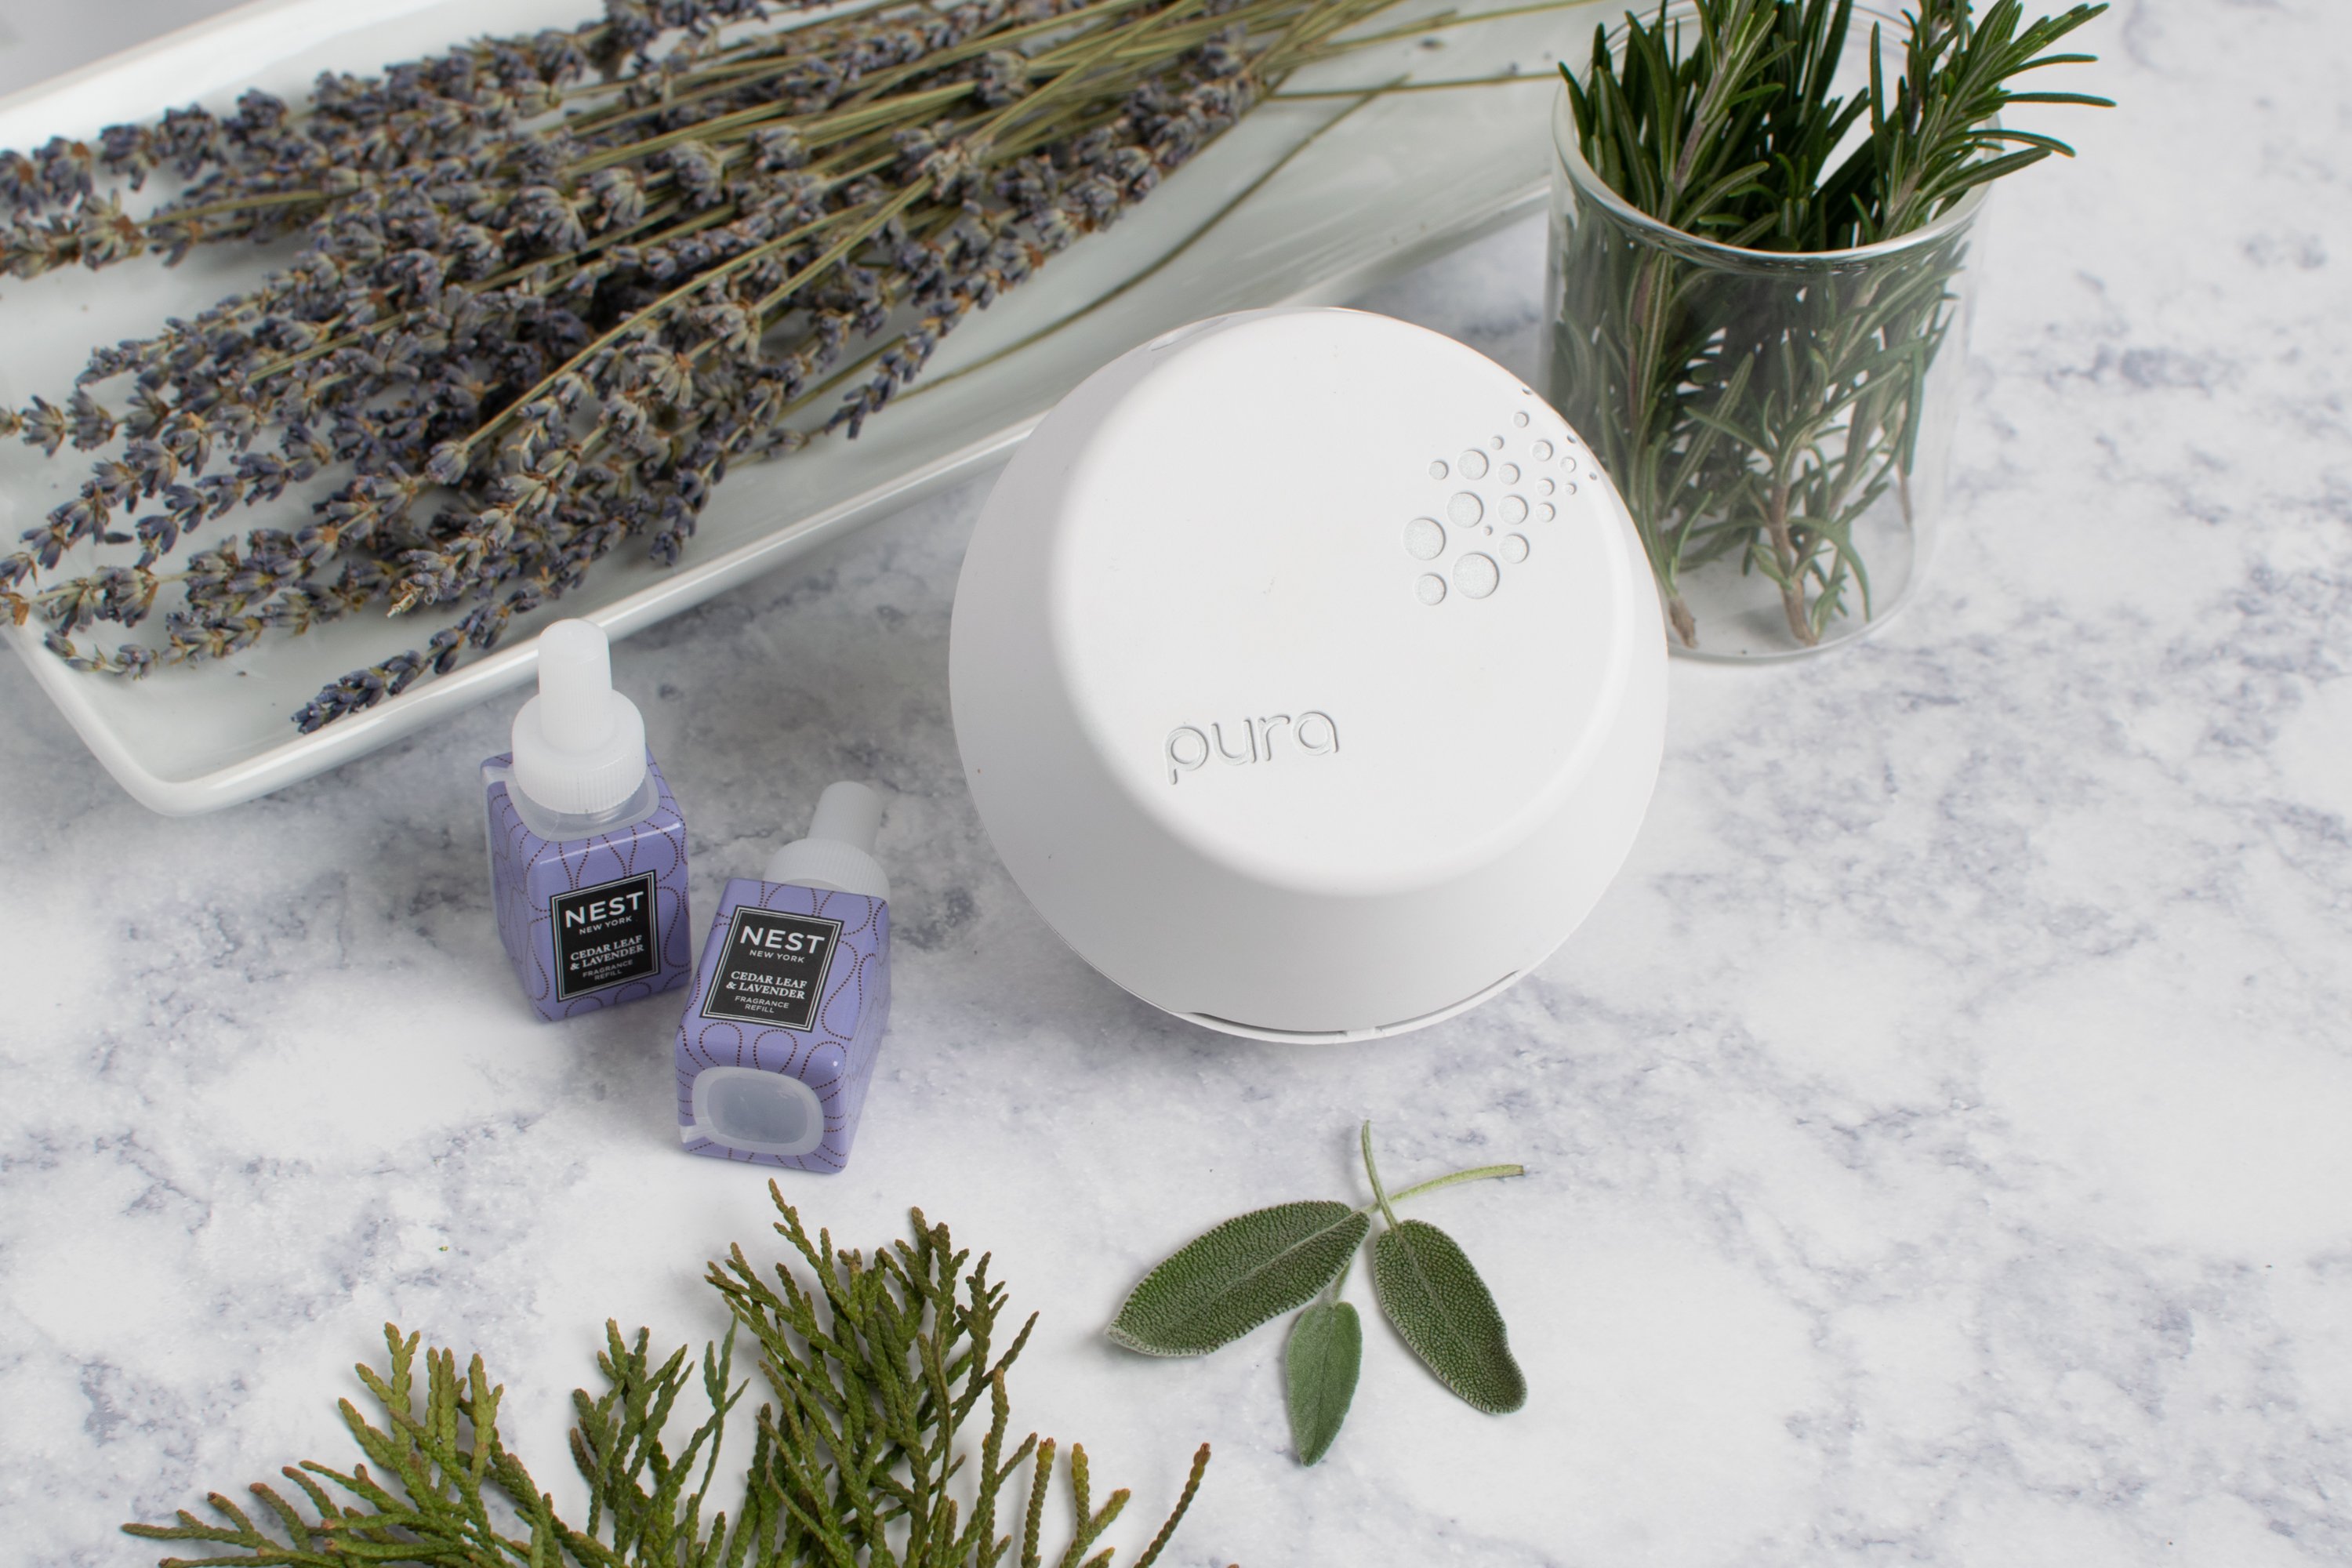 pura-nest-fragrance-device